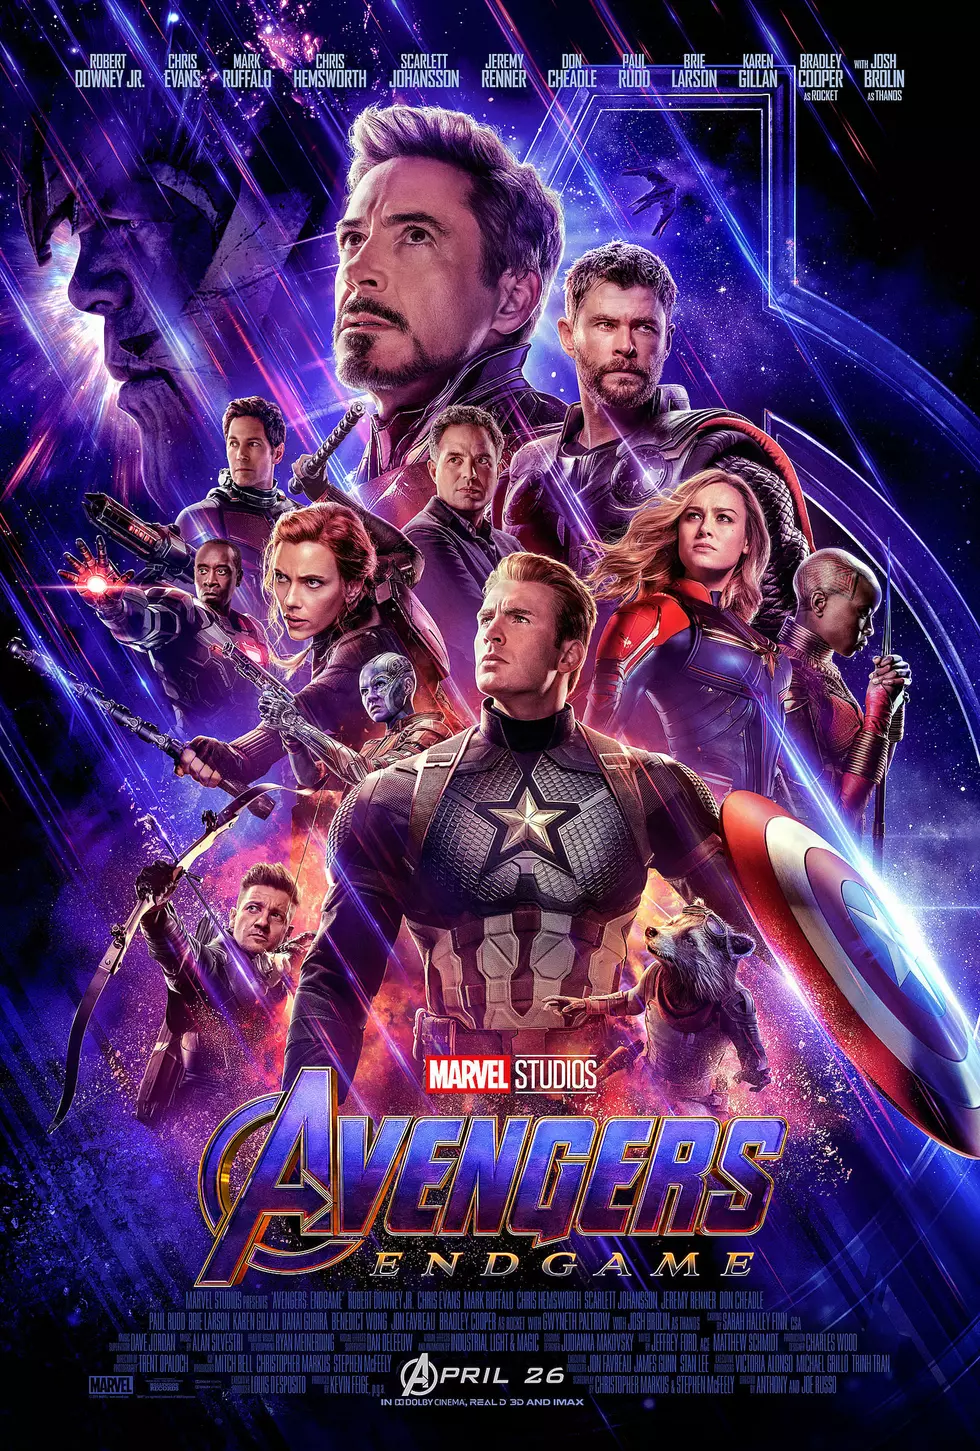 New “Avengers” Trailer Confirms Death of Capt. America’s Beard